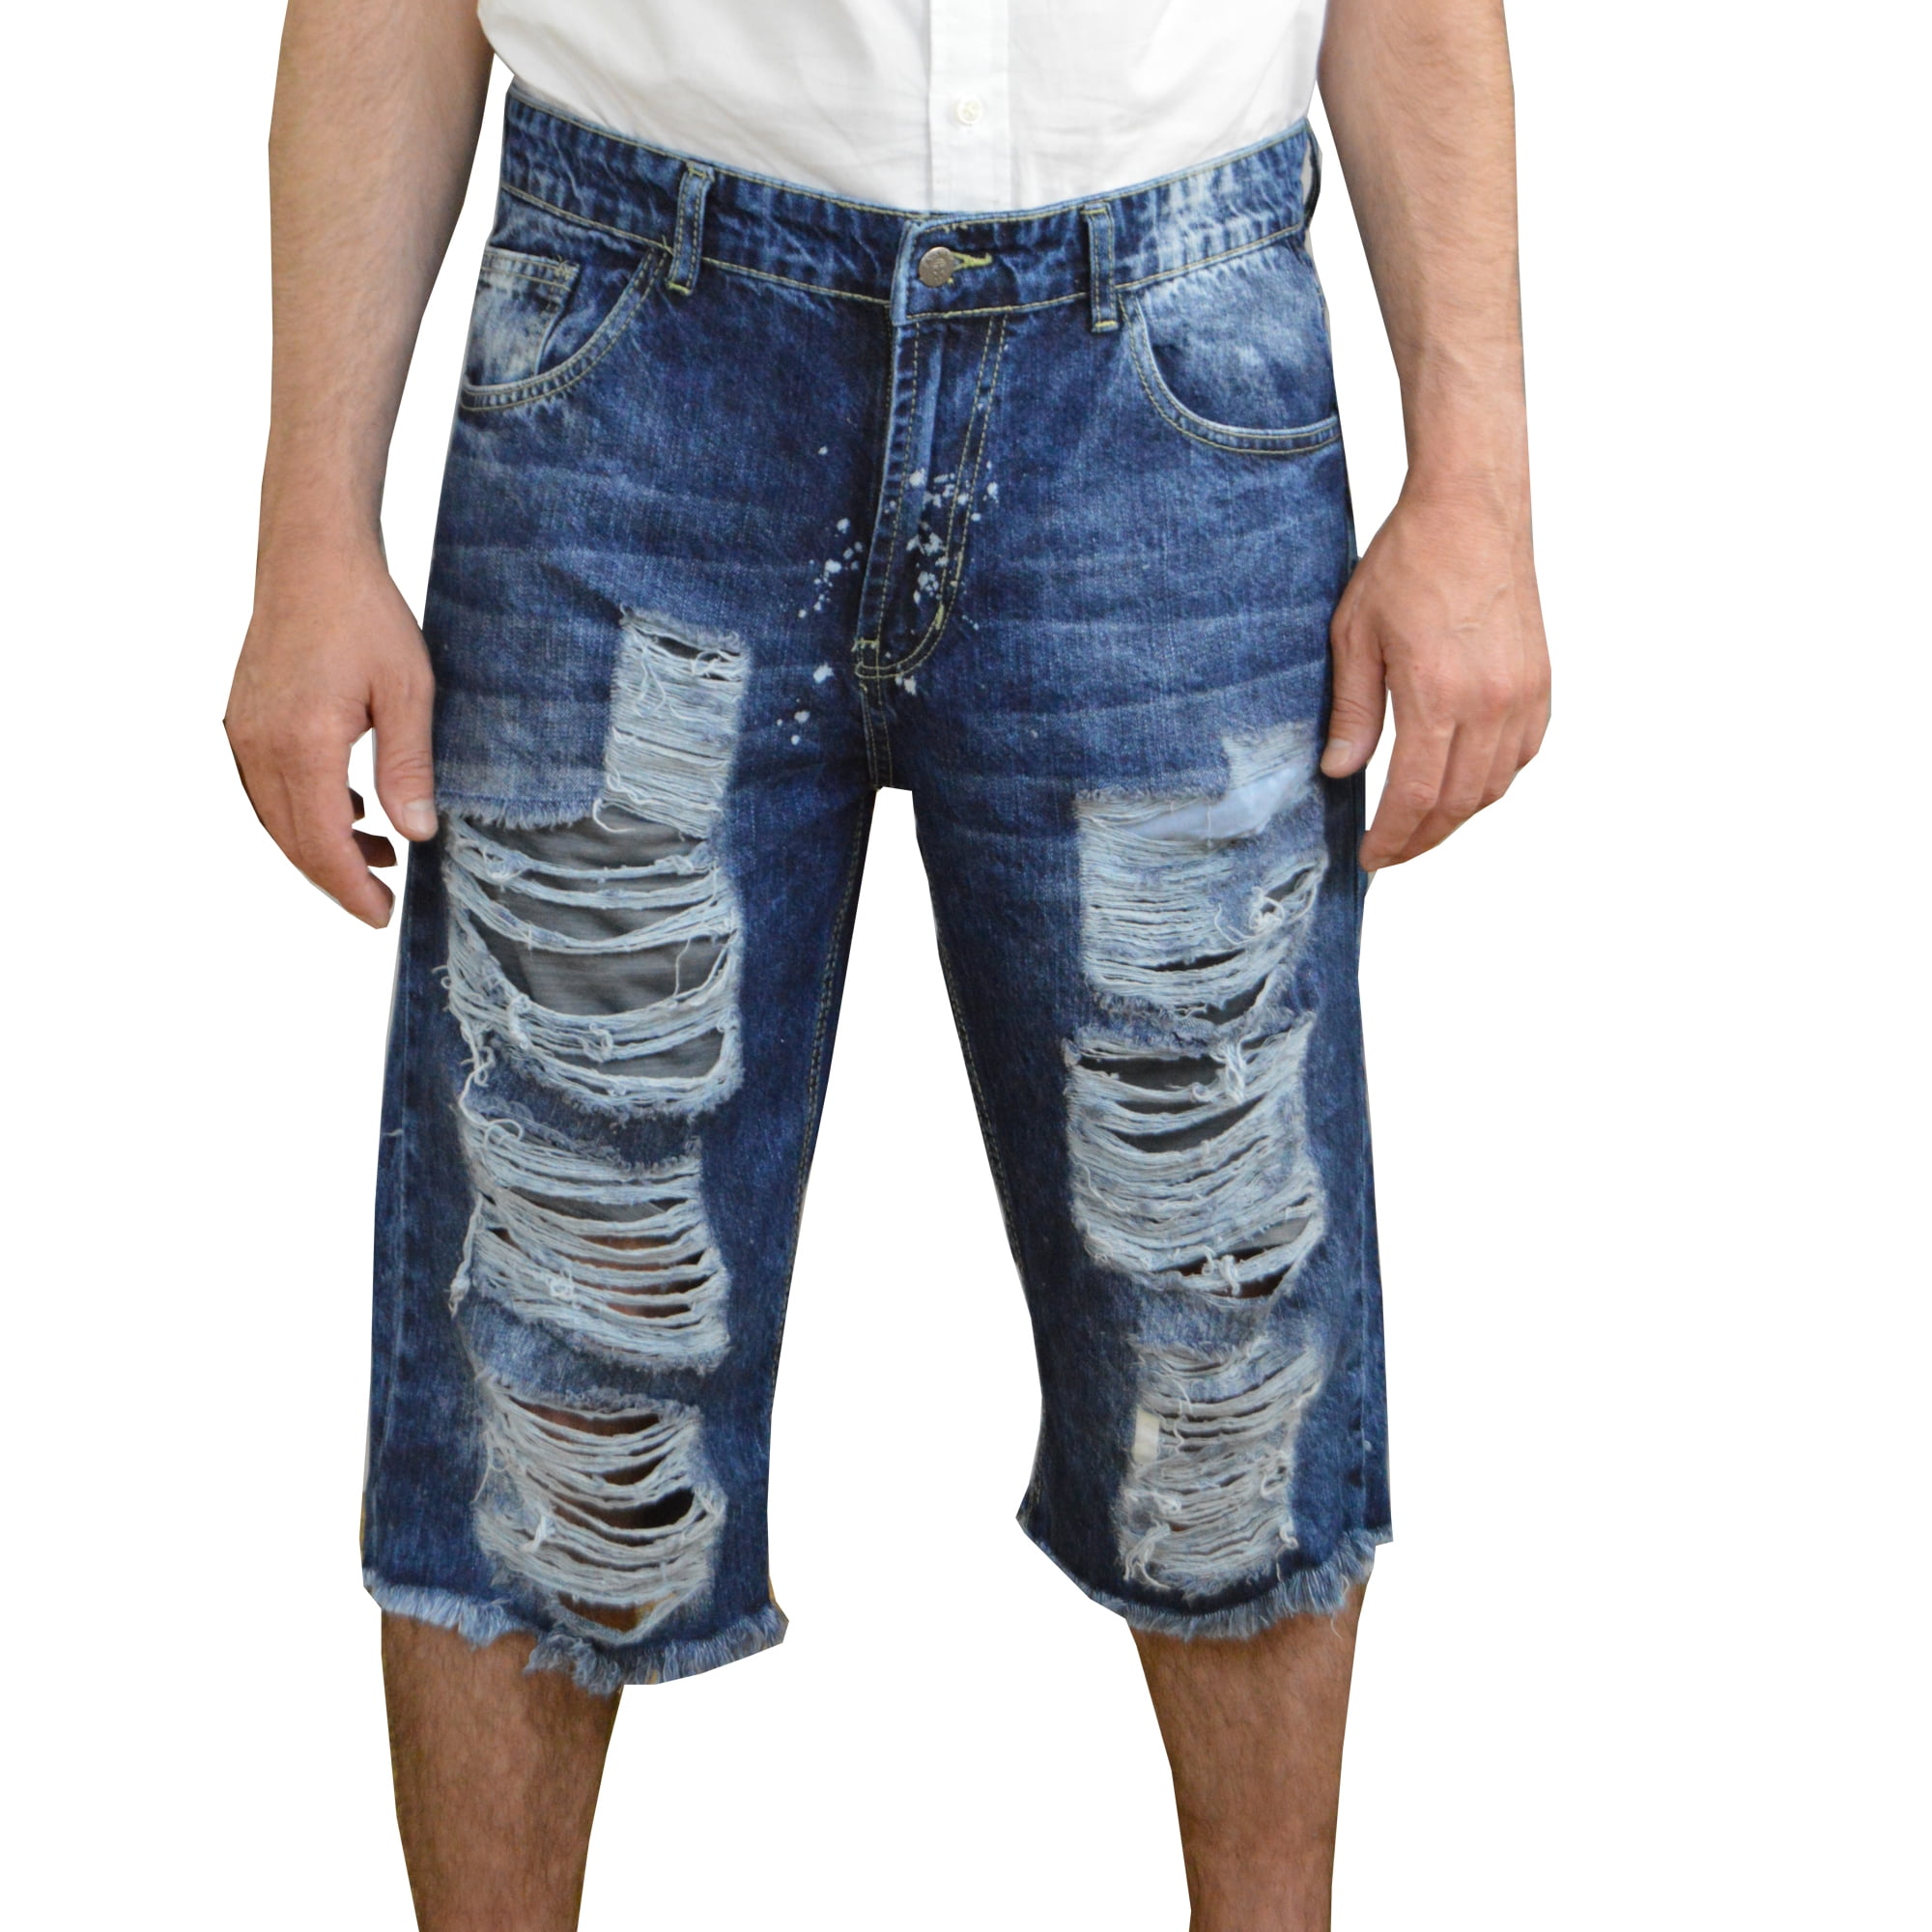 ouxiuli Mens Denim Shorts Jeans Pants Cotton Ripped Distressed for Men 